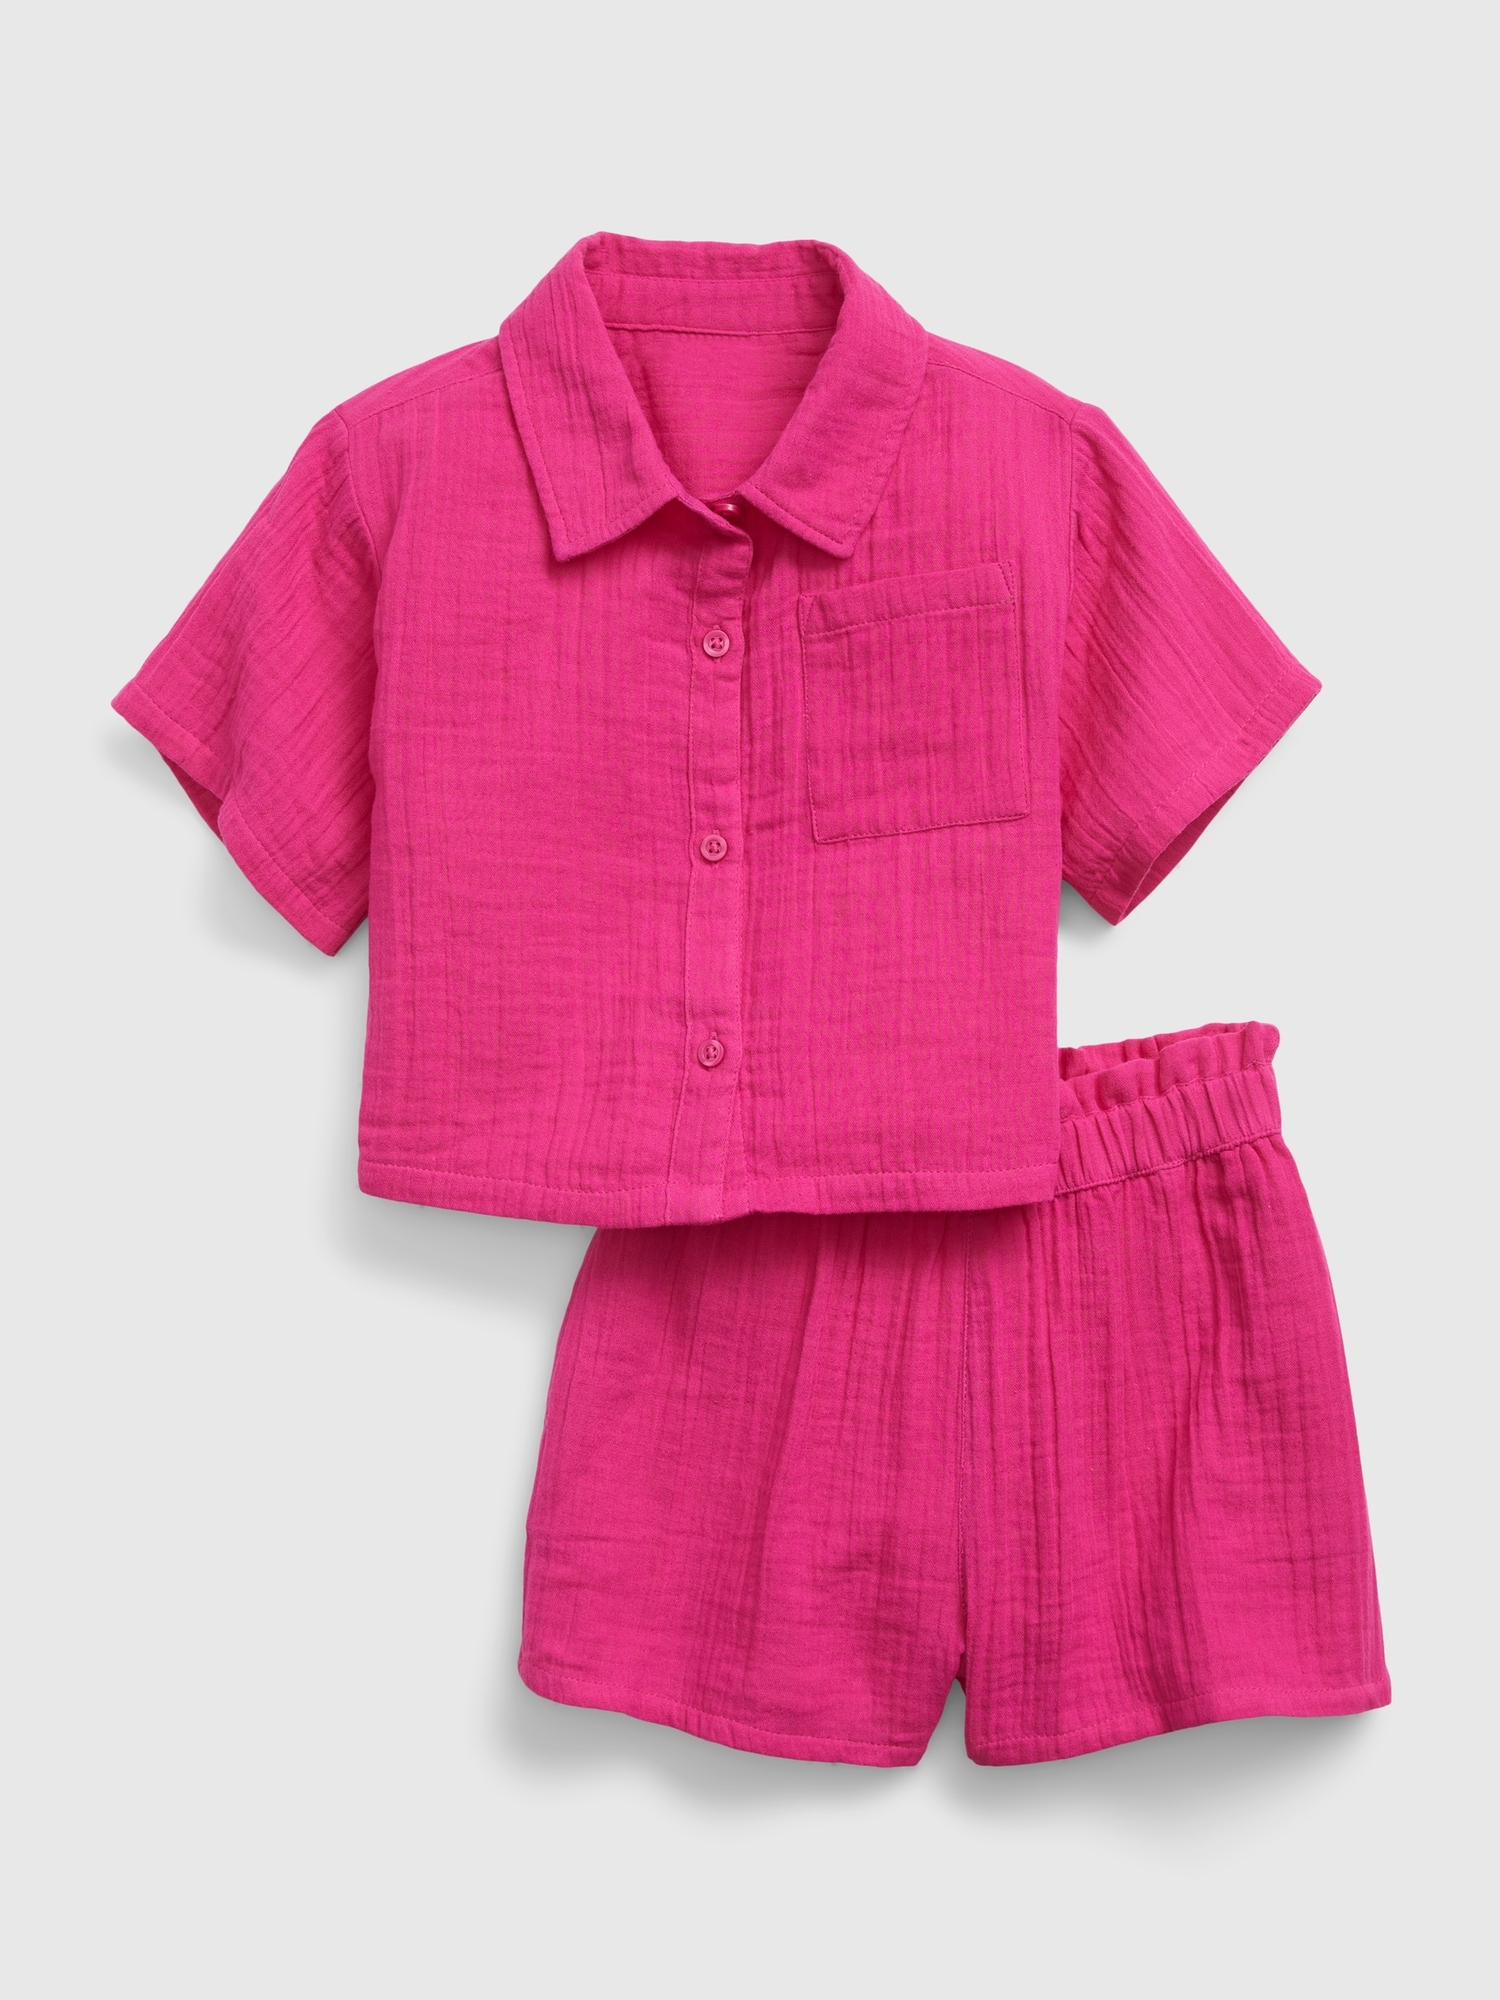 Toddler Crinkle Gauze Outfit Set | Gap